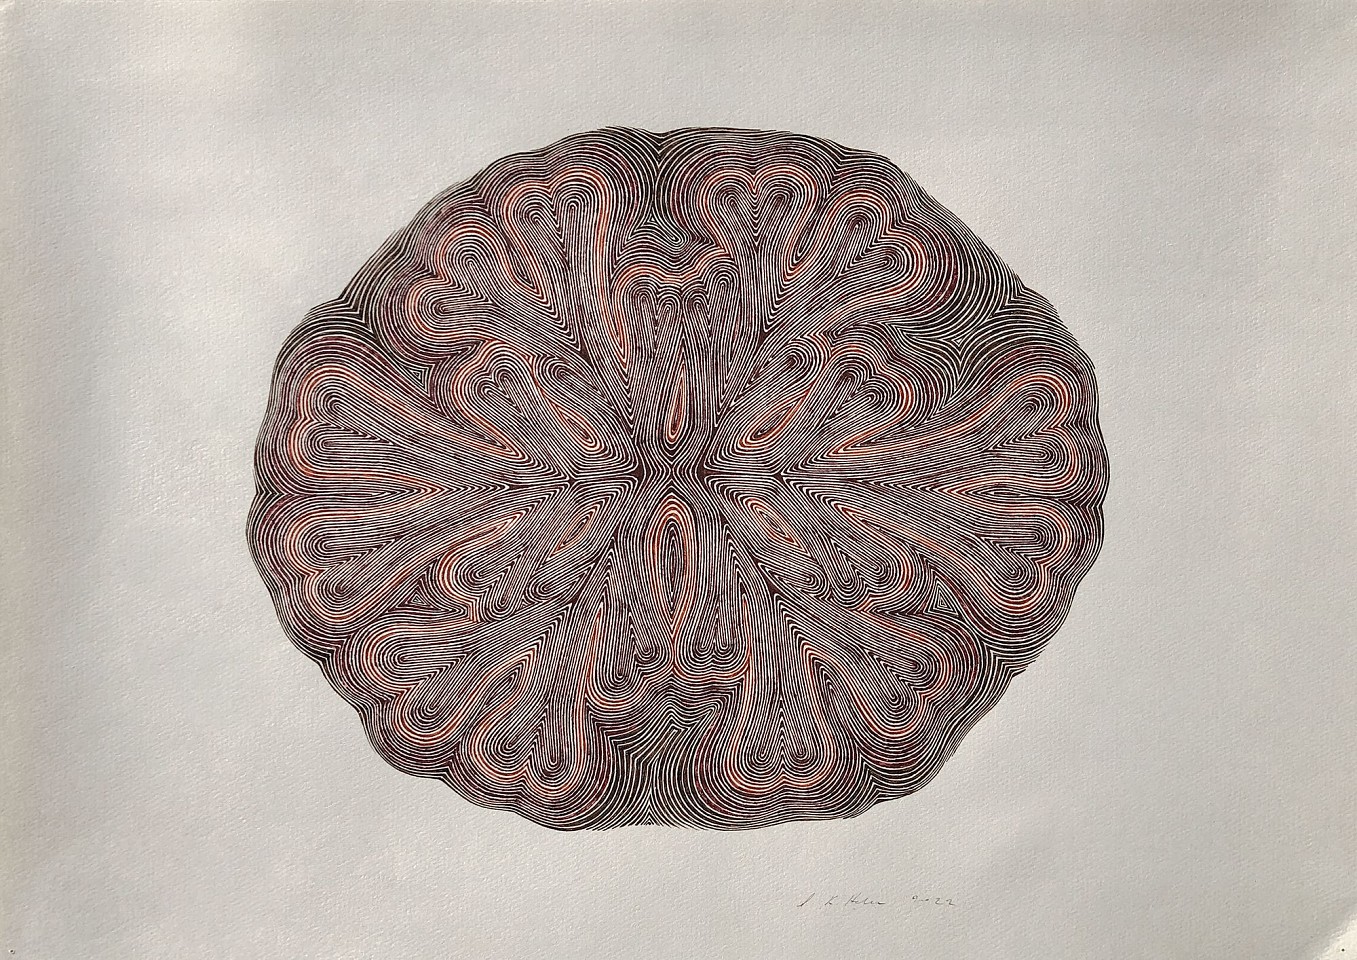 Stewart Helm, Flower Head, 2021
ink on paper, 20.75"x15"
SH-642
Price Upon Request